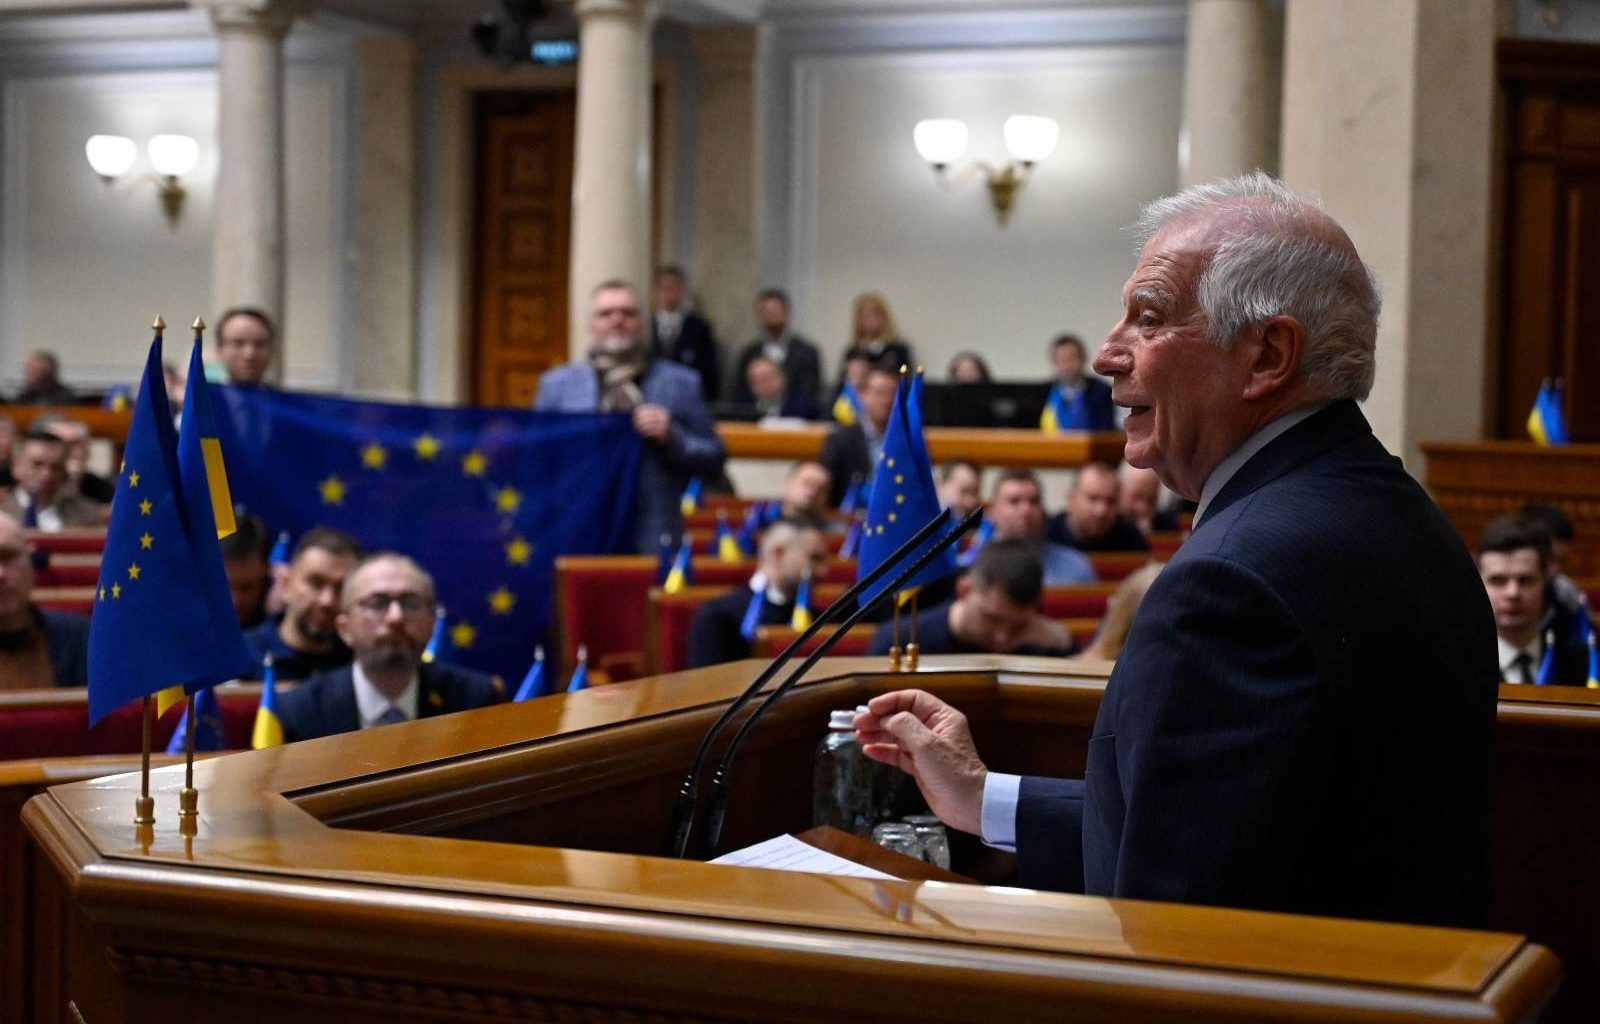 Josep Borrell Ukraine parliament